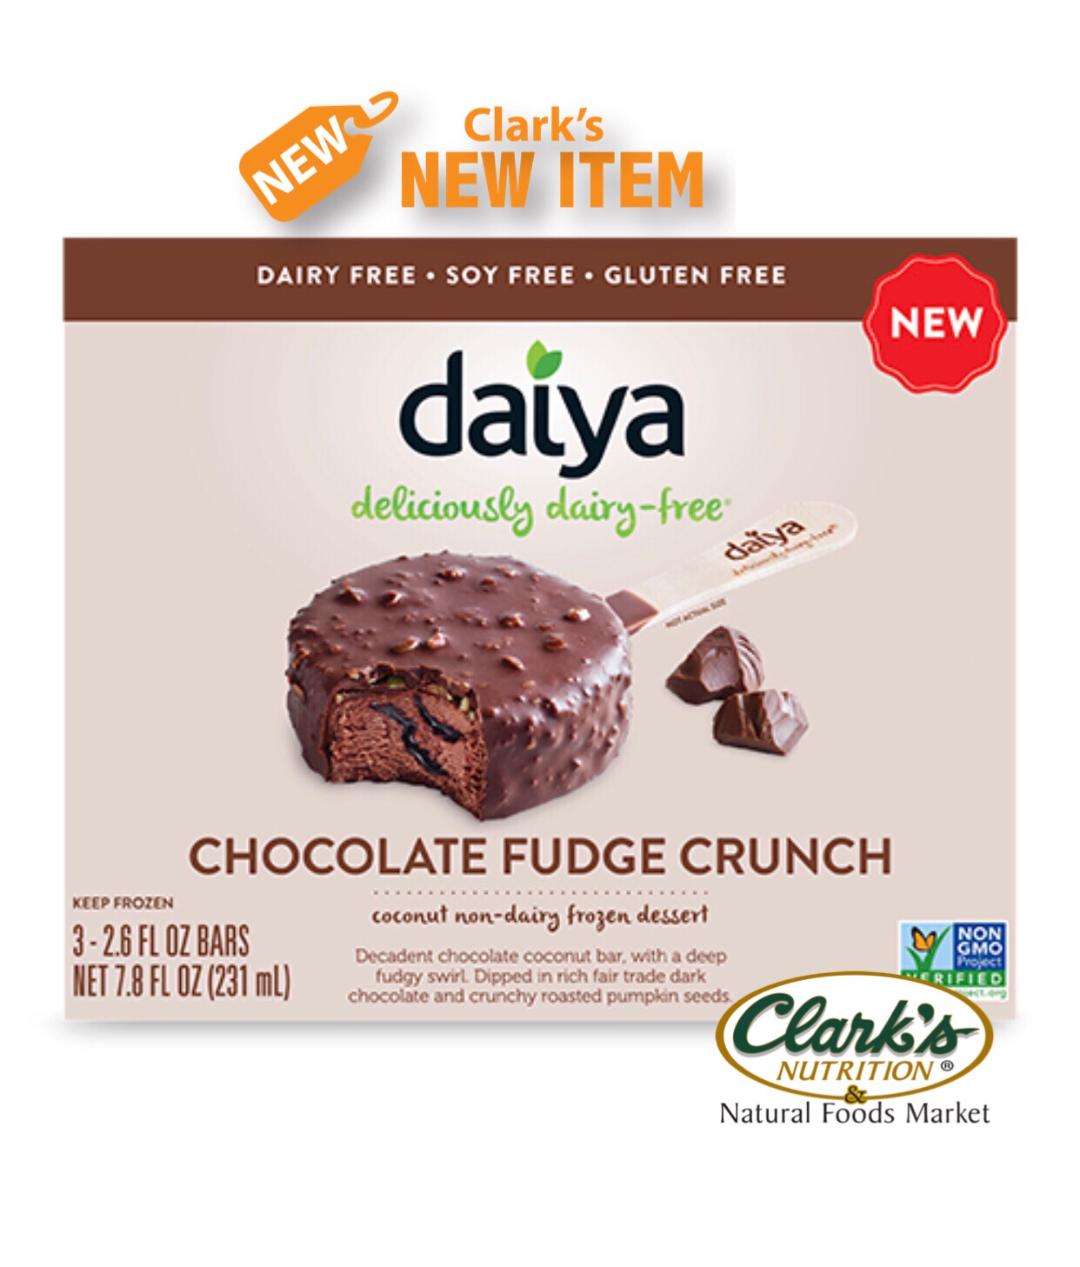 Clarks Nutrition And Natural Foods Markets Daiya Dessert Bars